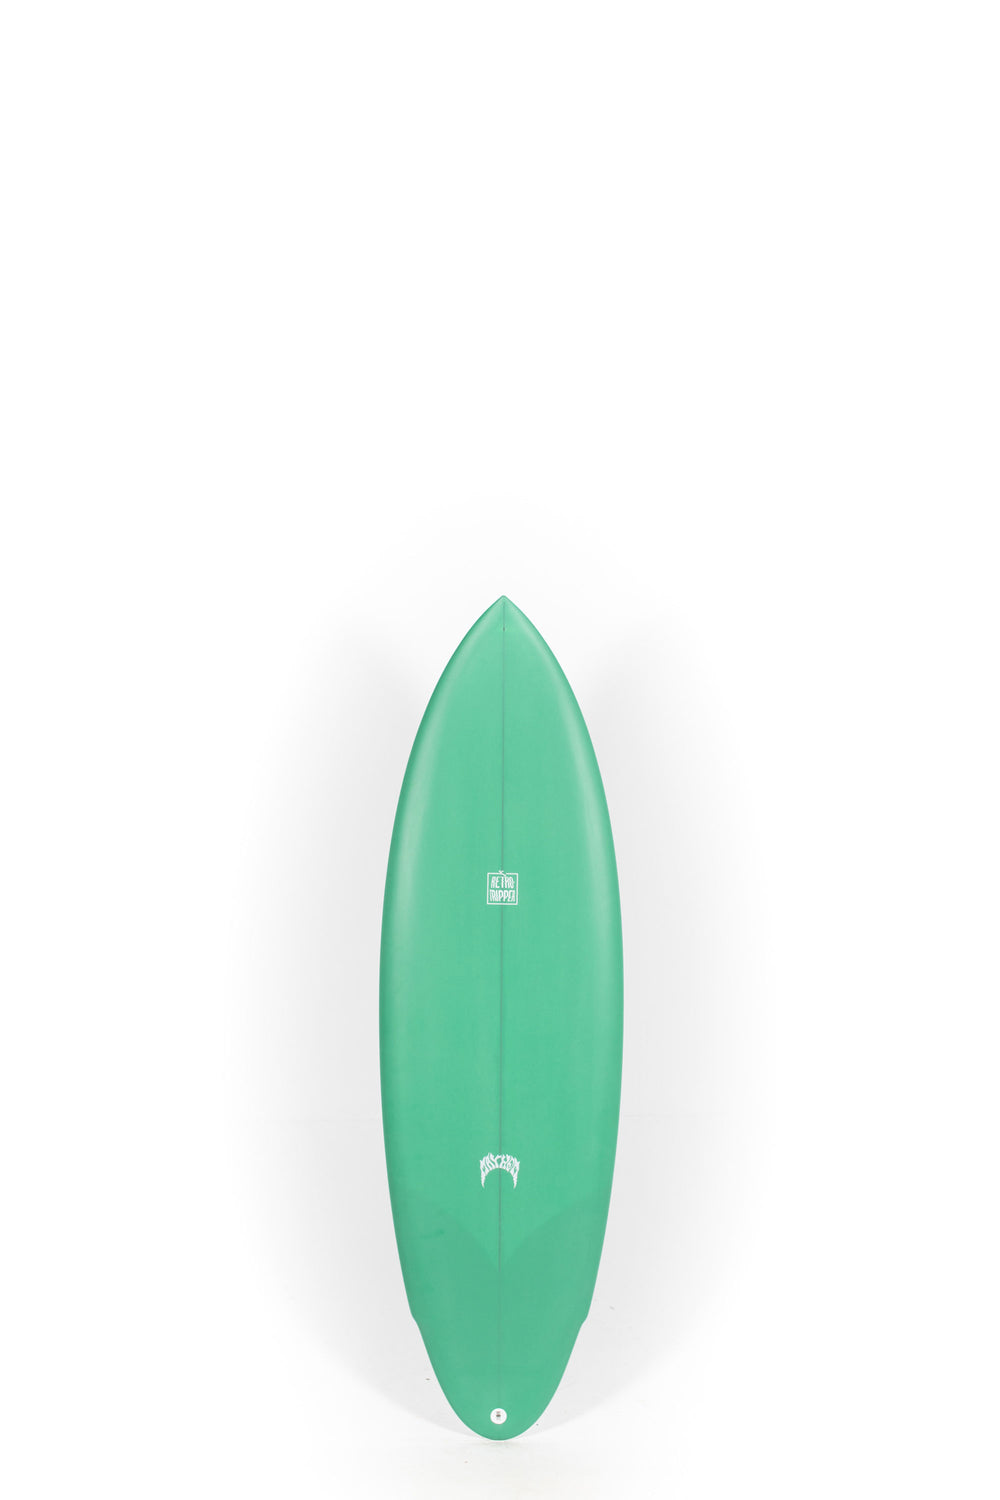 Pukas Surf Shop - Lost Surfboard - RETRO TRIPPER by Matt Biolos - 5'7